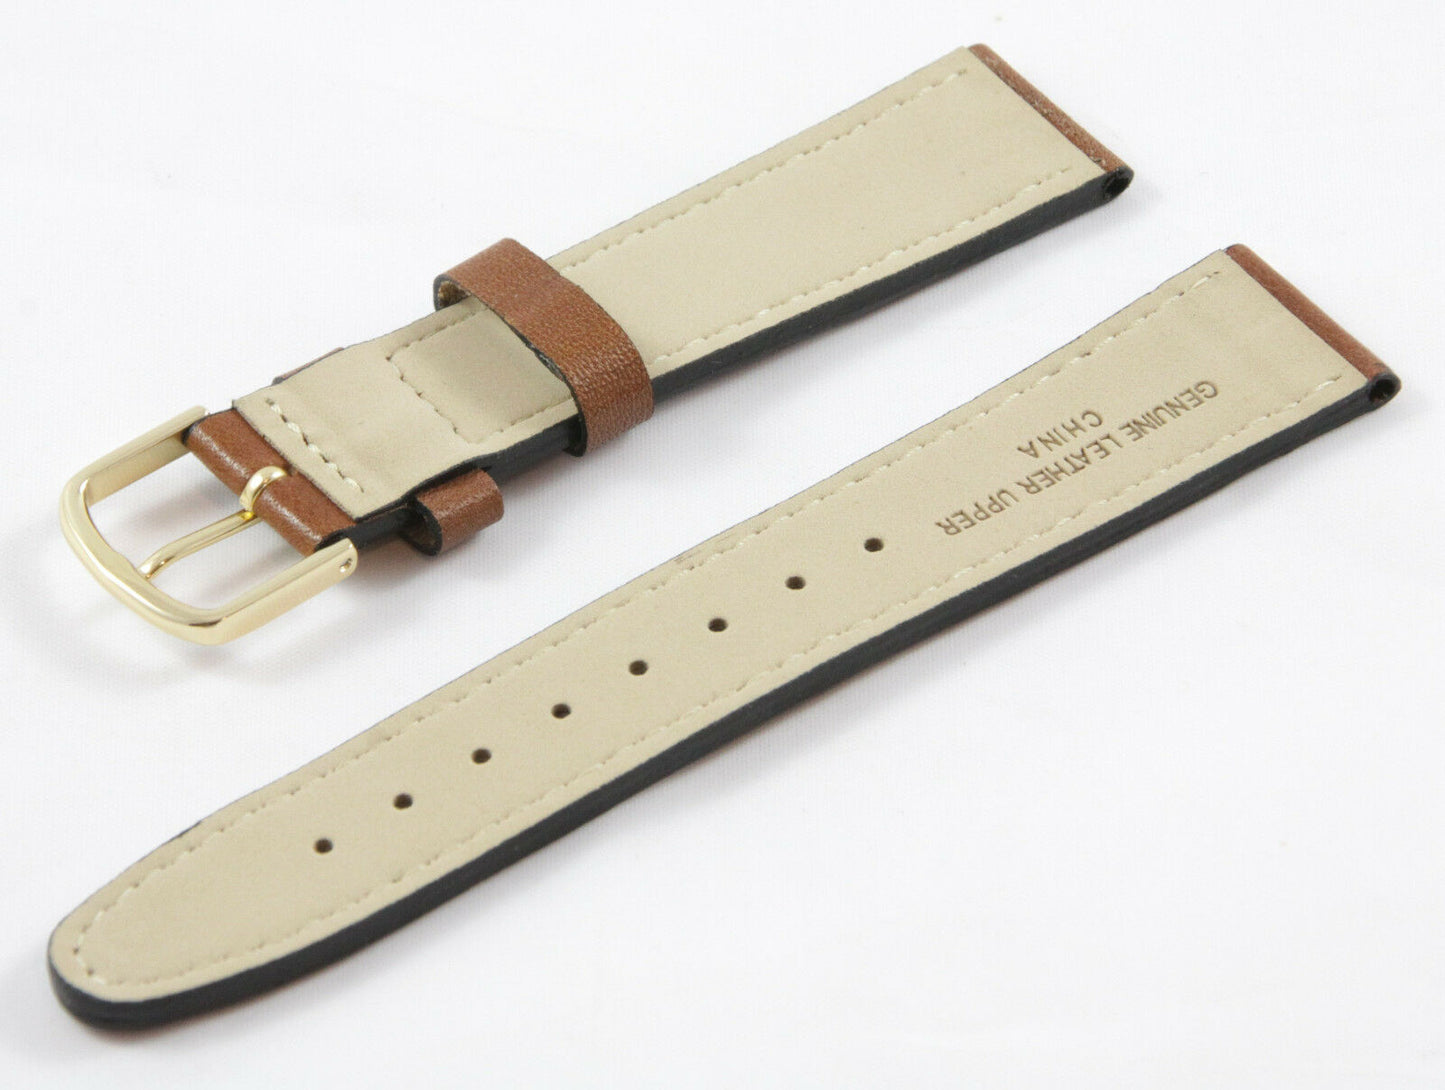 Timex Ersatzarmband T20011 Easy Reader Original 18mm Ersatzband Leder universal